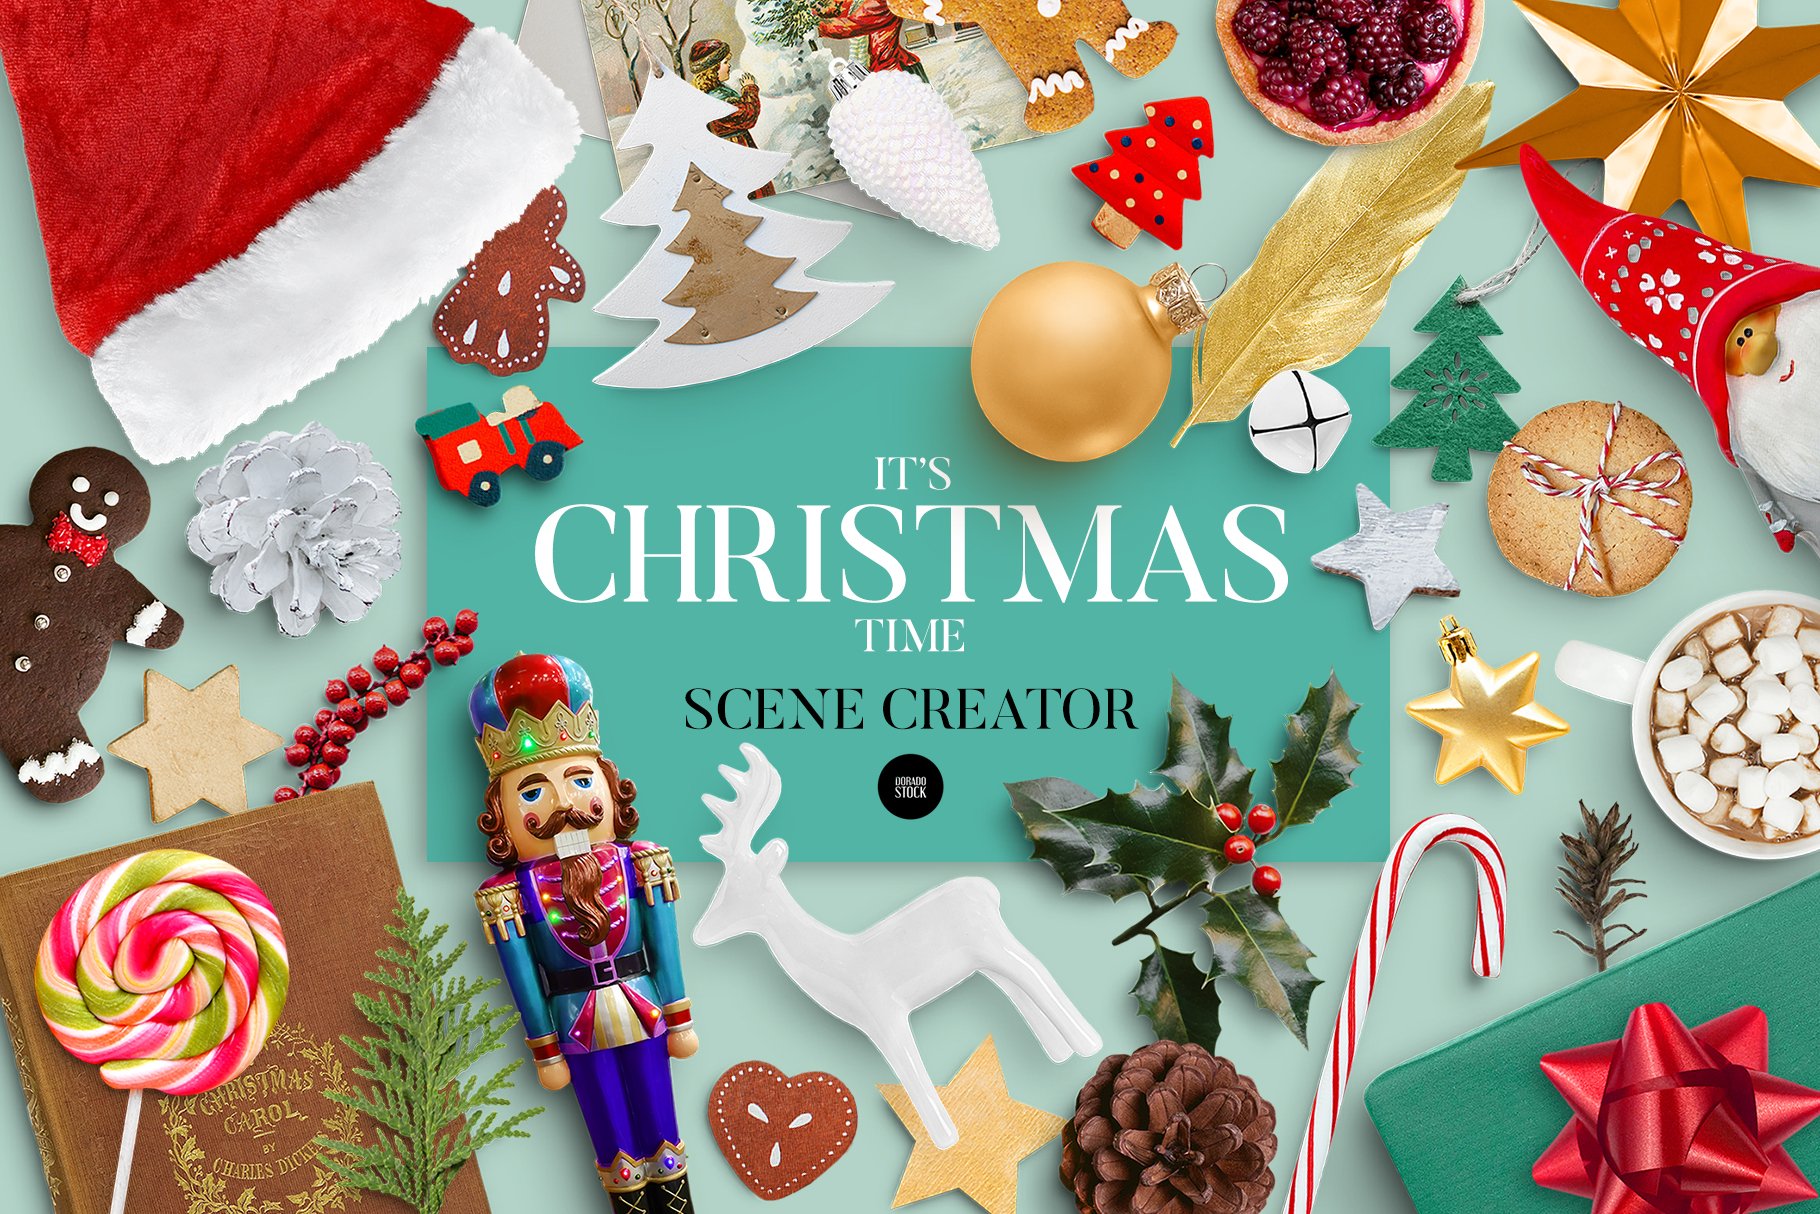 Christmas Scene Creator cover image.